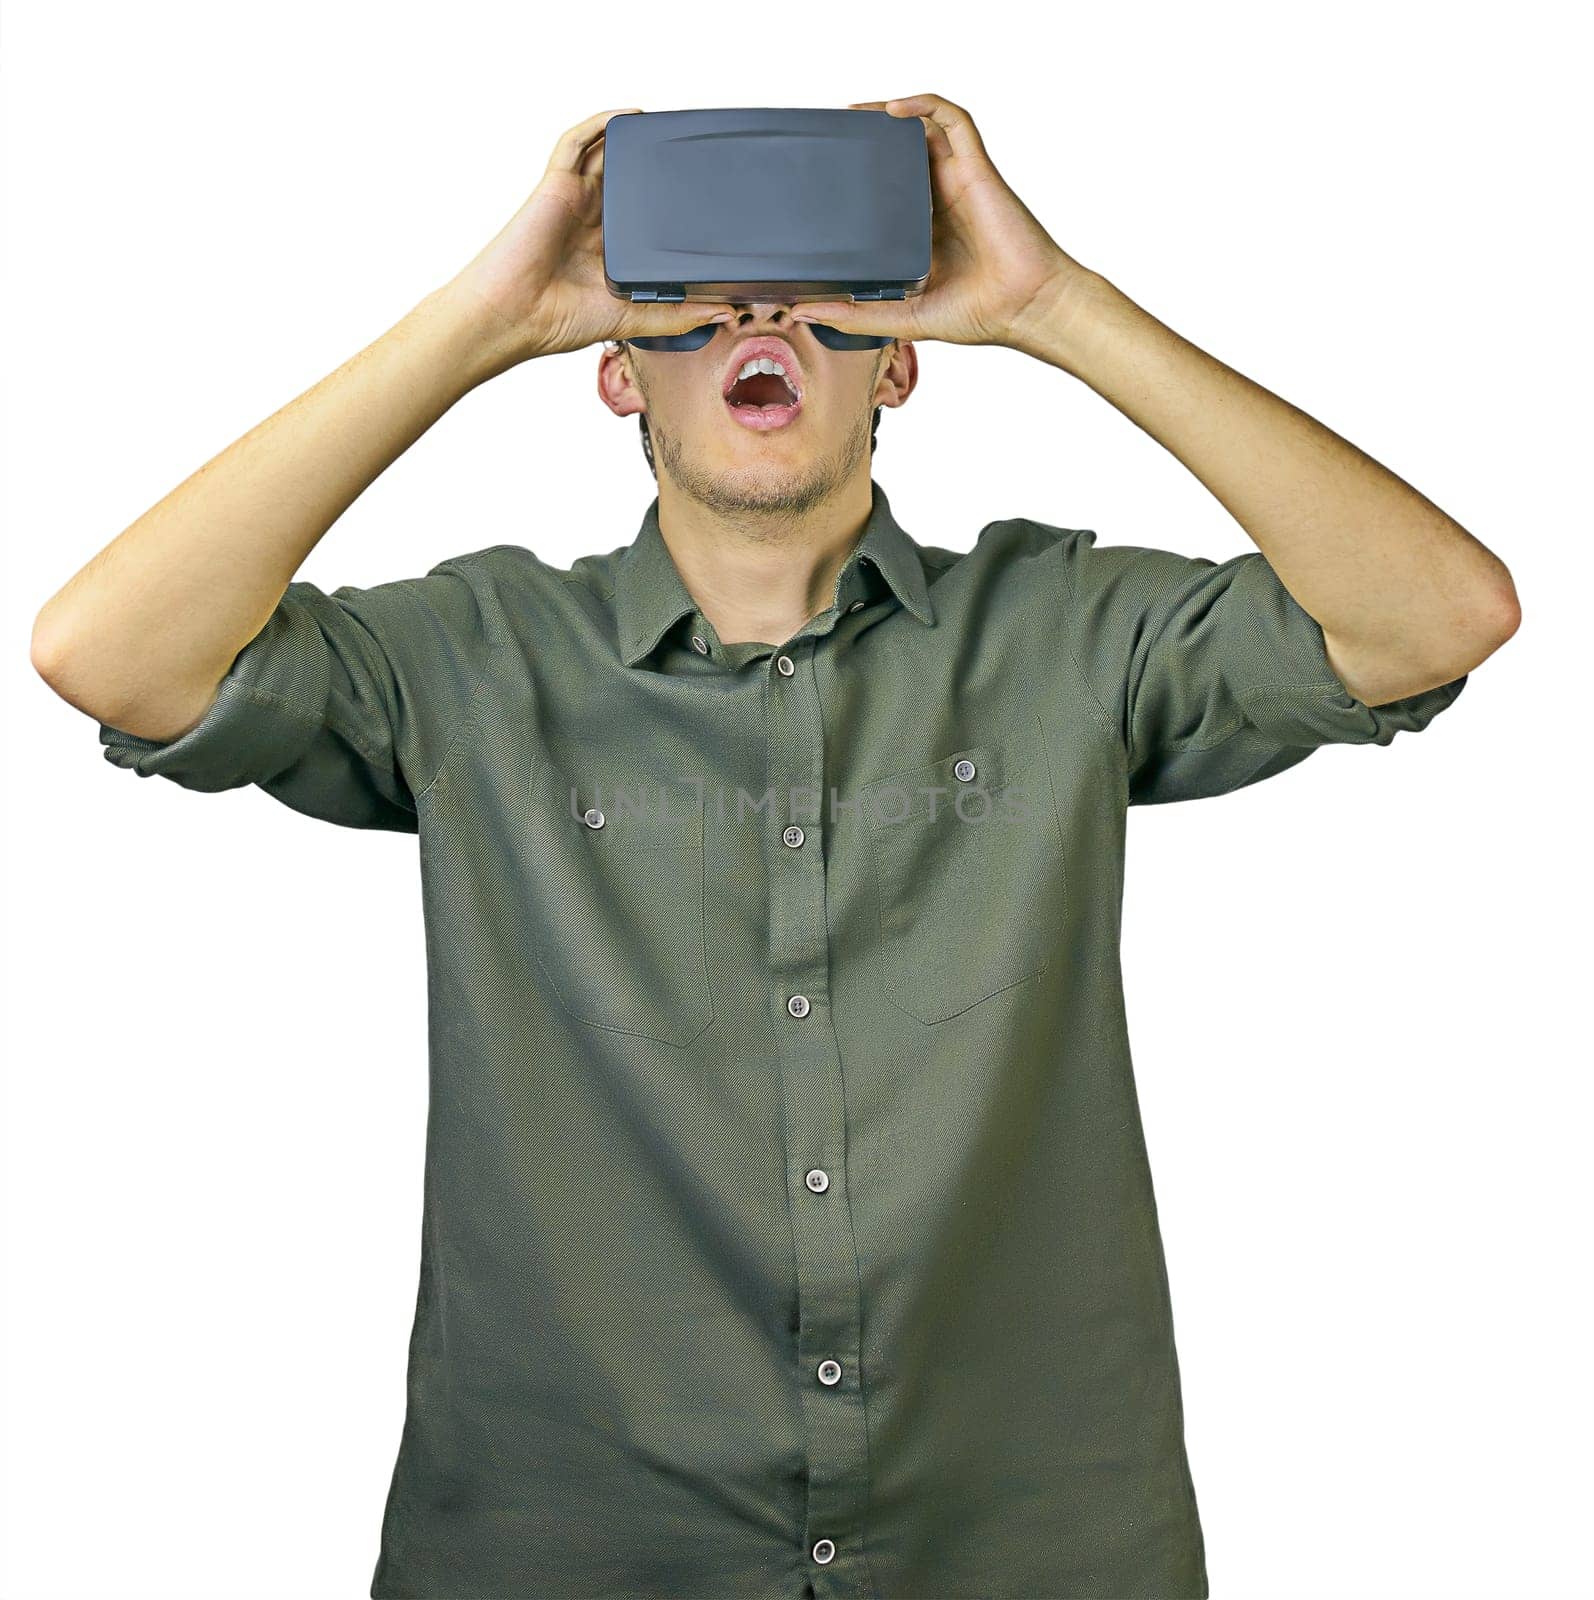 Man uses VR by savconstantine